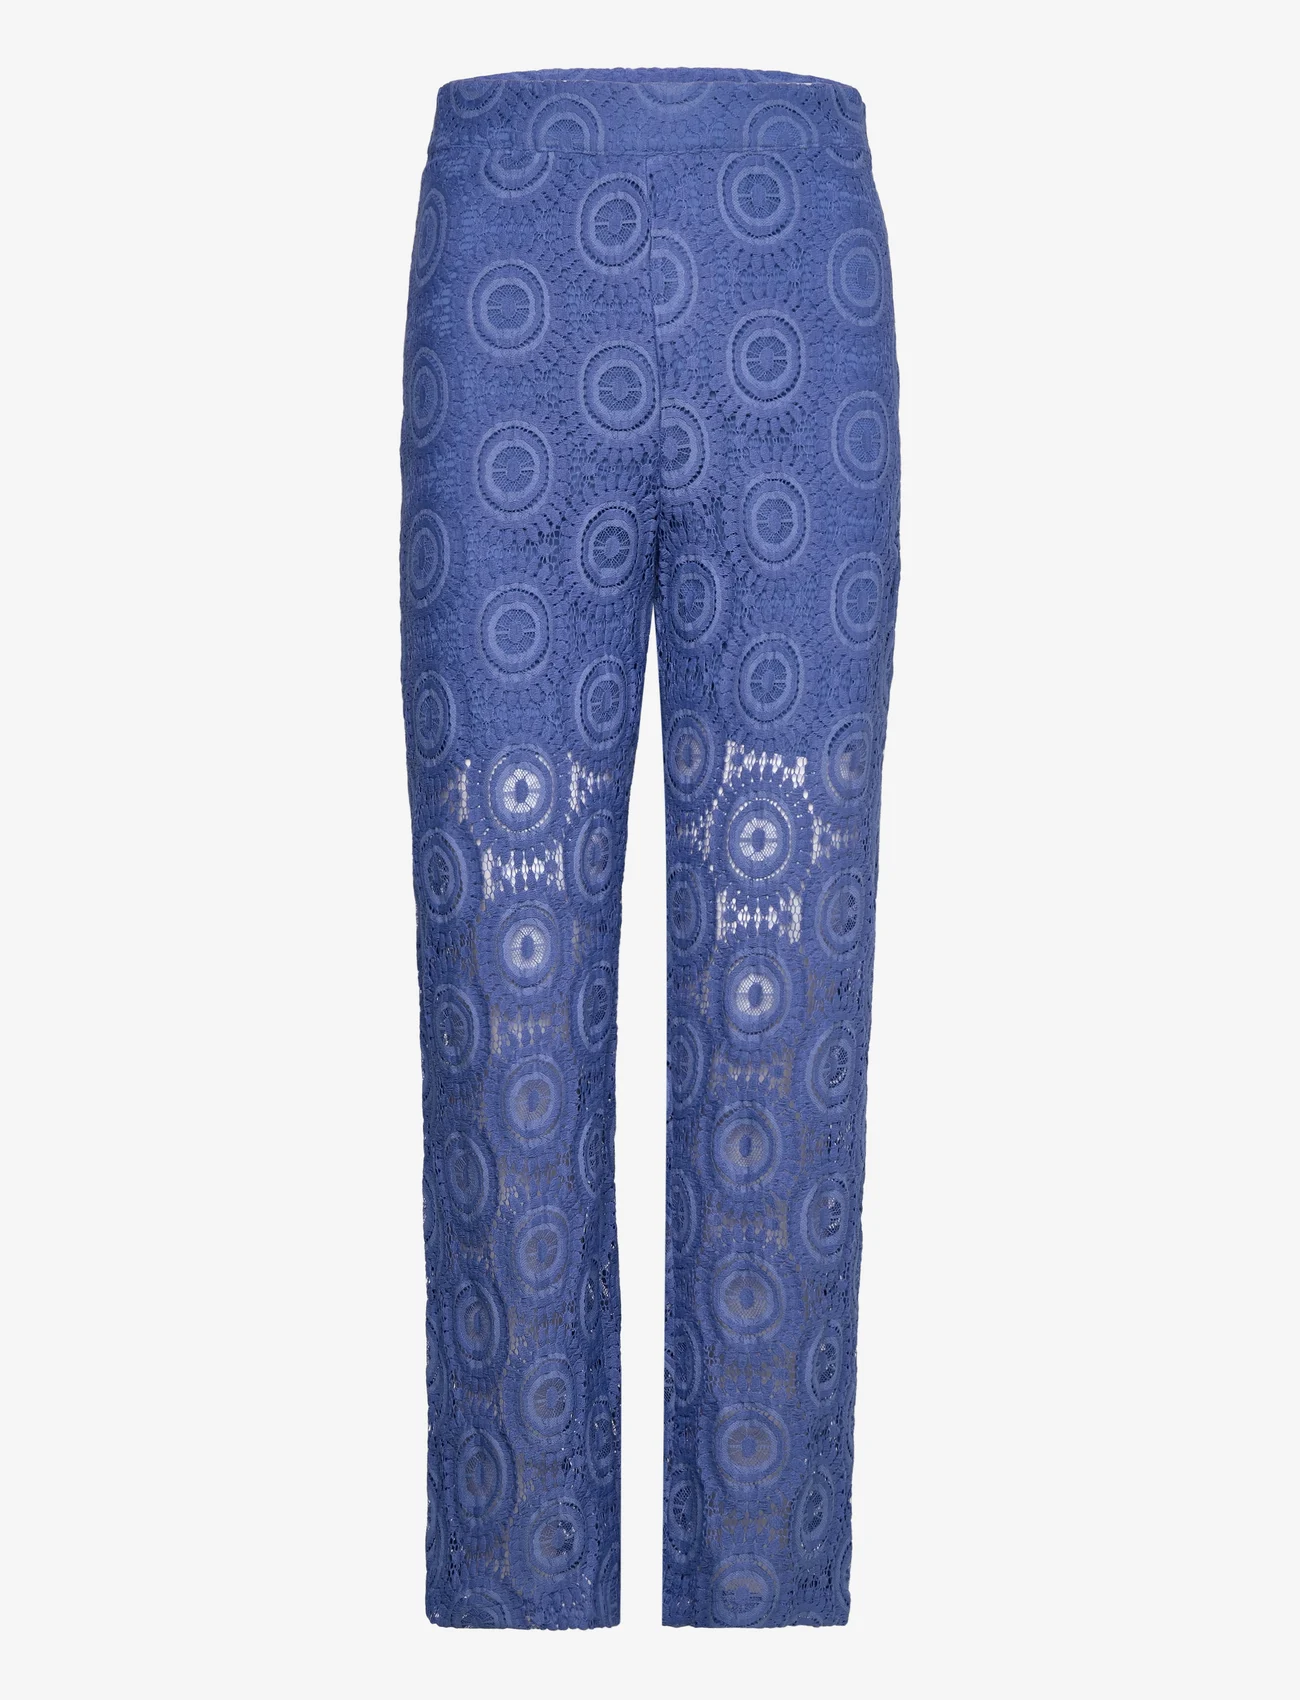 Minus - Kalina Lace Pants 2 - spodnie szerokie - regatta blue - 0